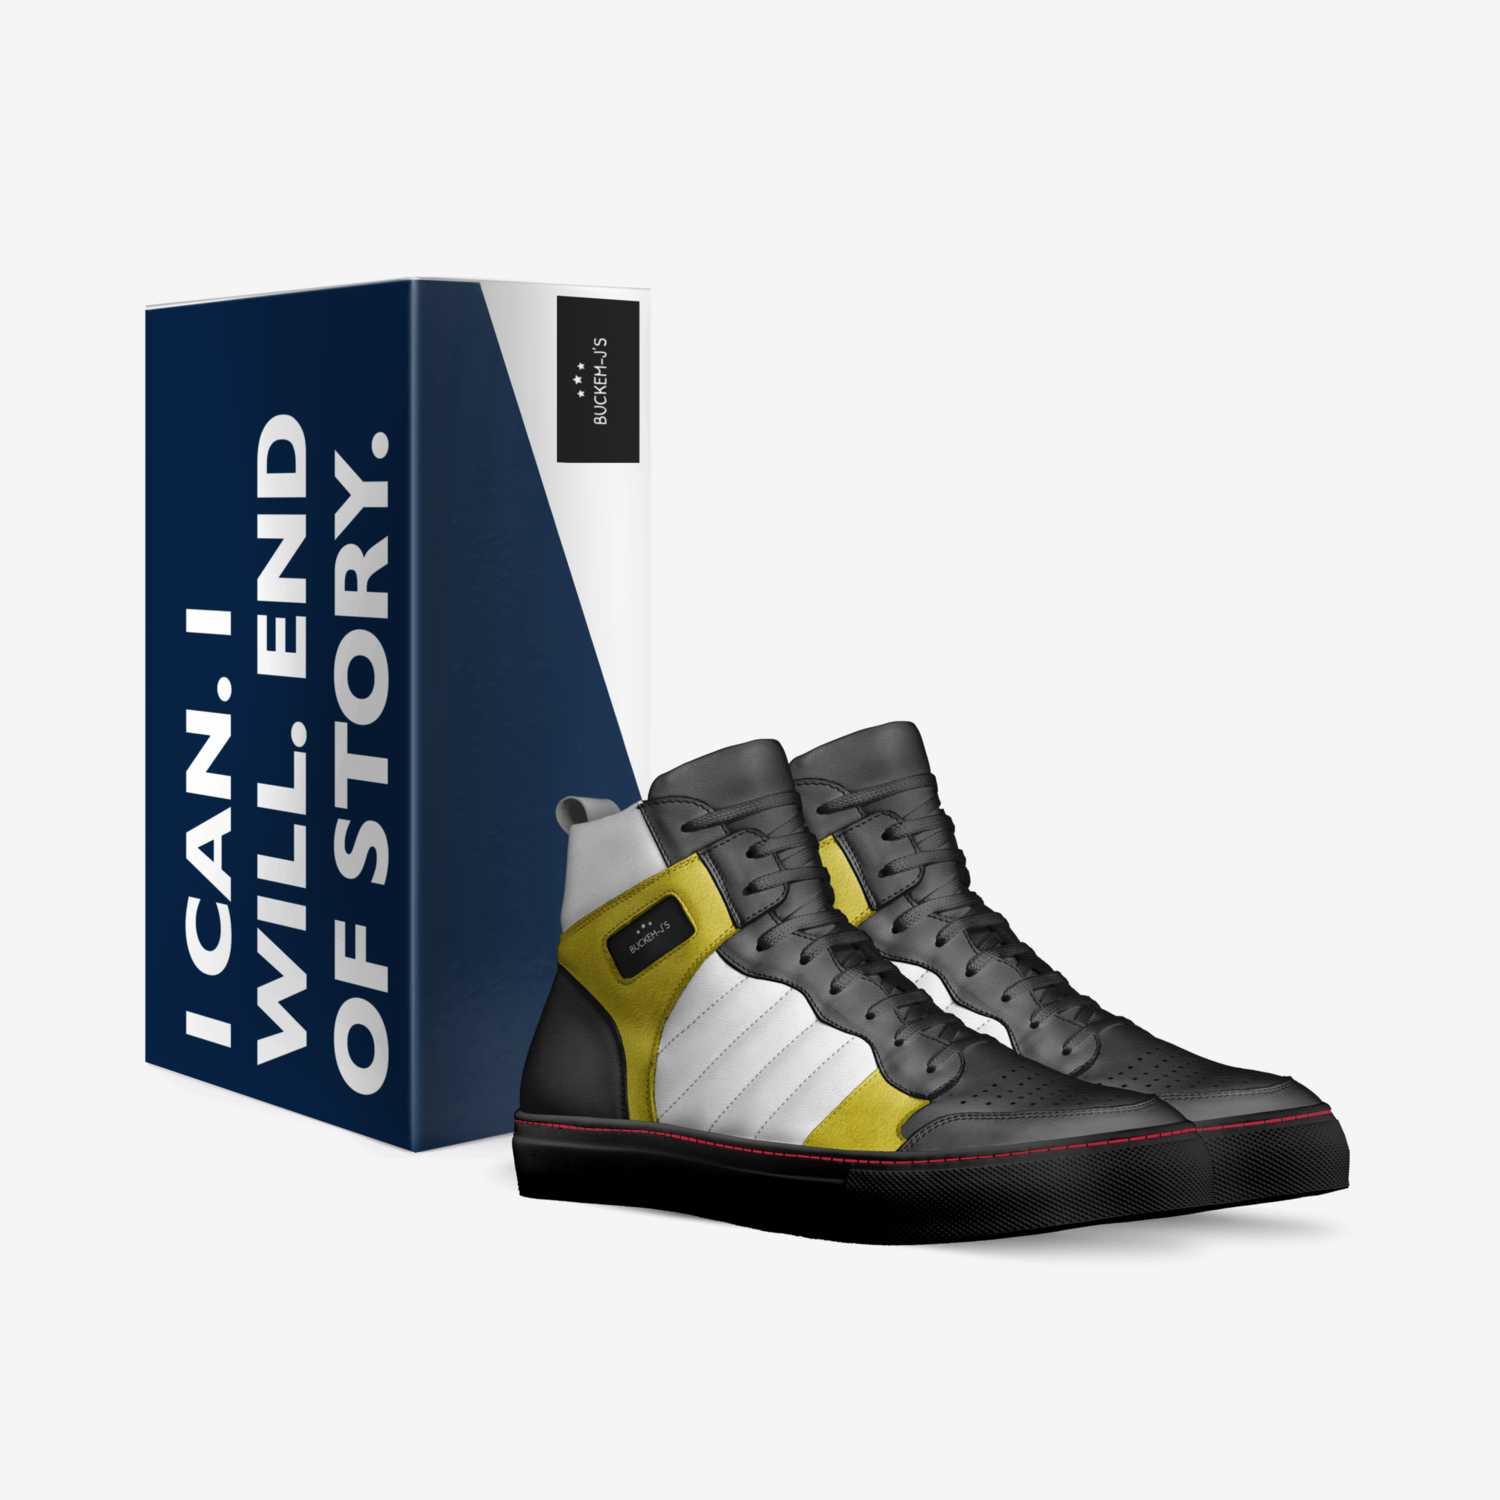 Buckem-J's custom made in Italy shoes by Leon Howard | Box view